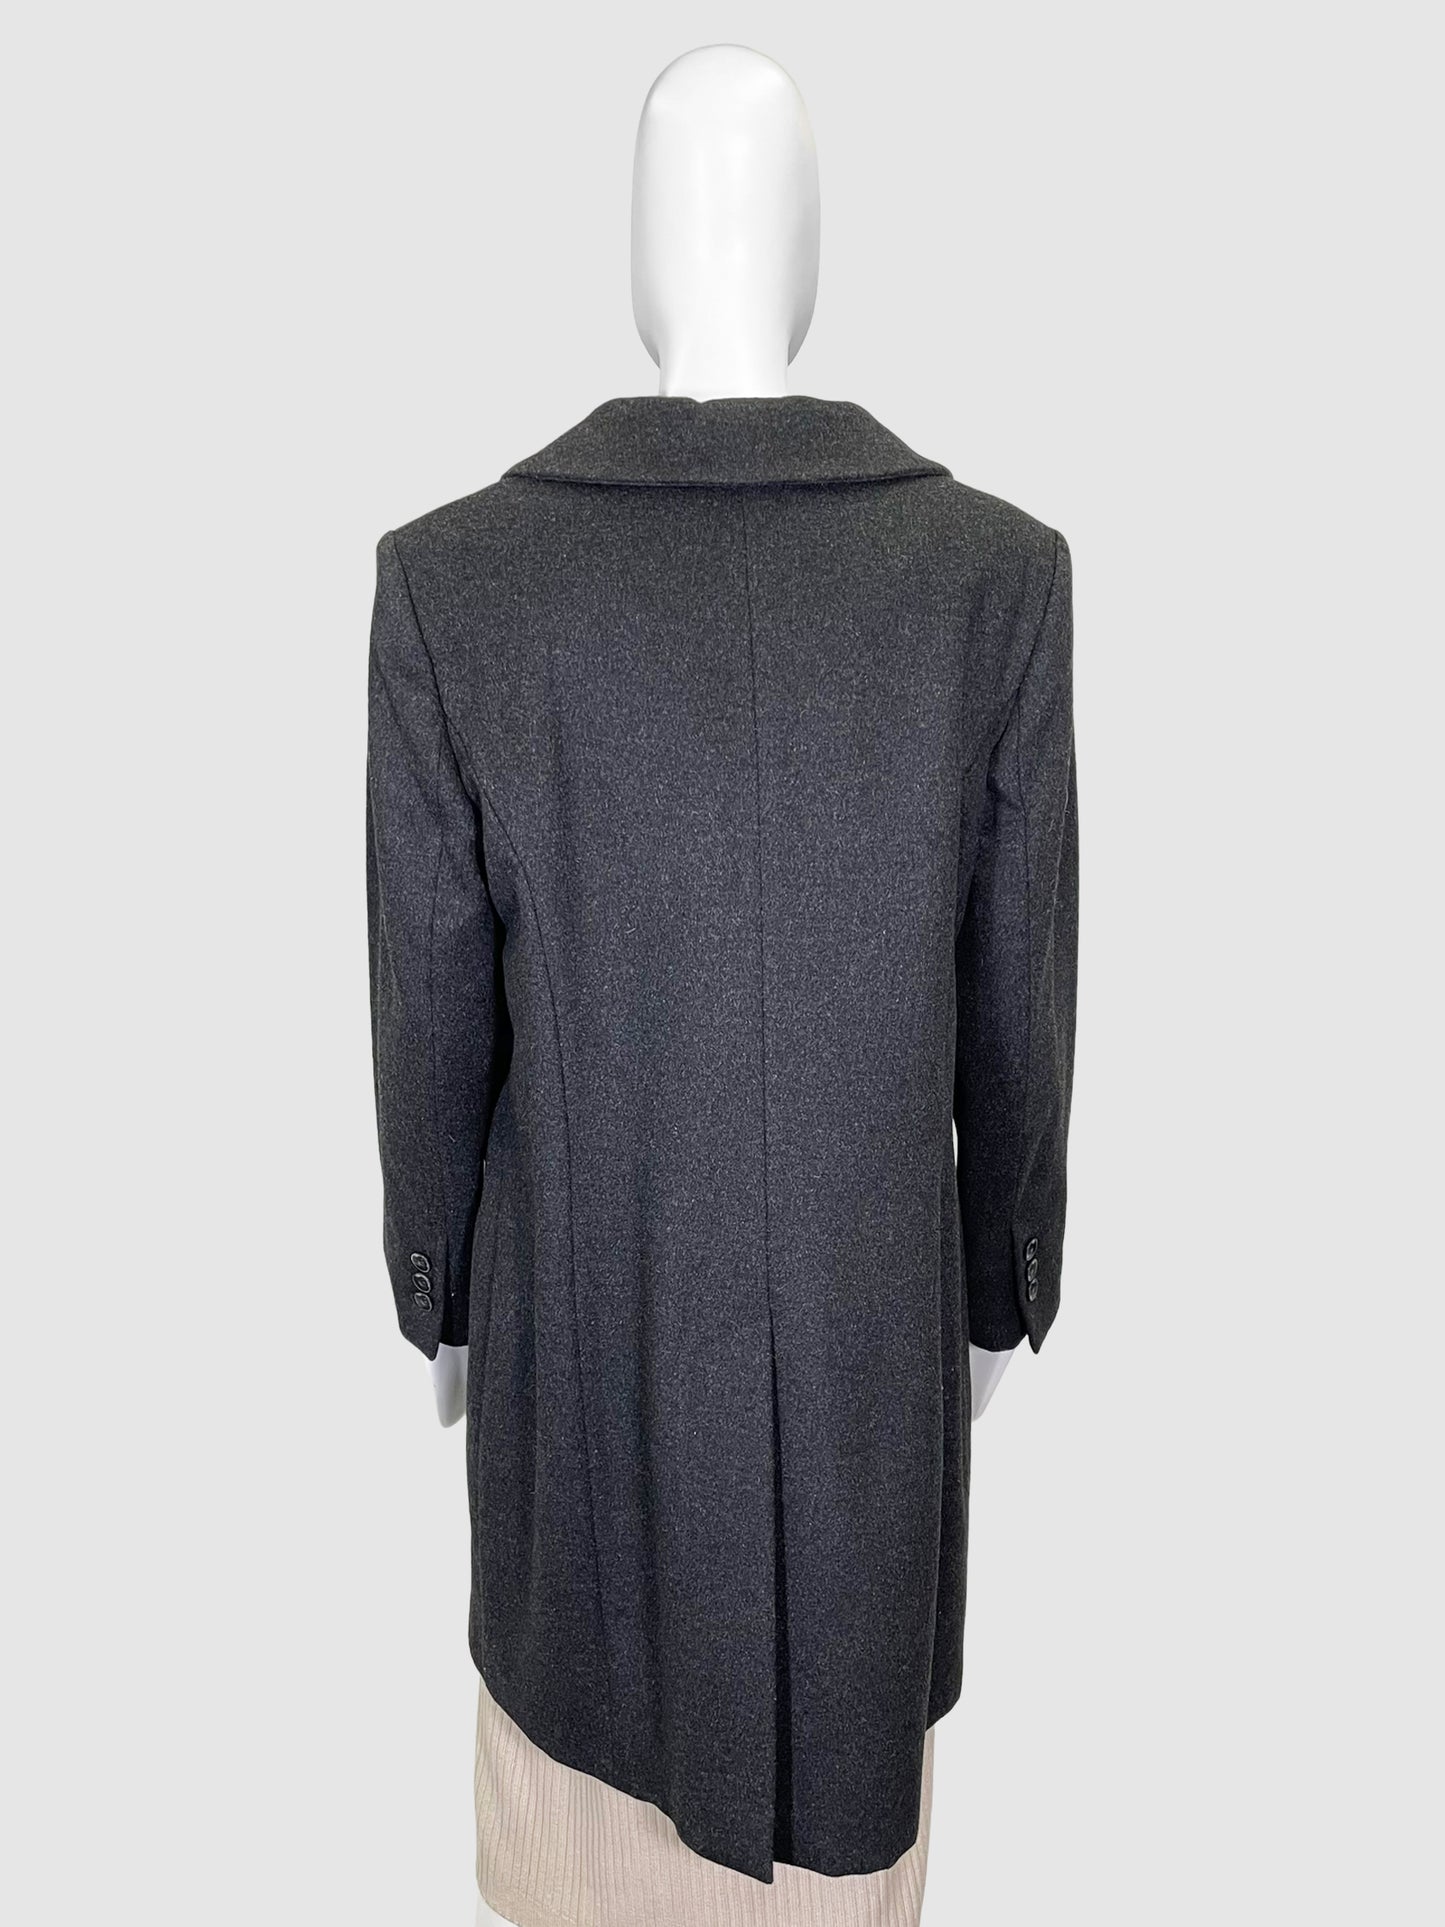 David Findlay Tailored Wool Coat - Size L